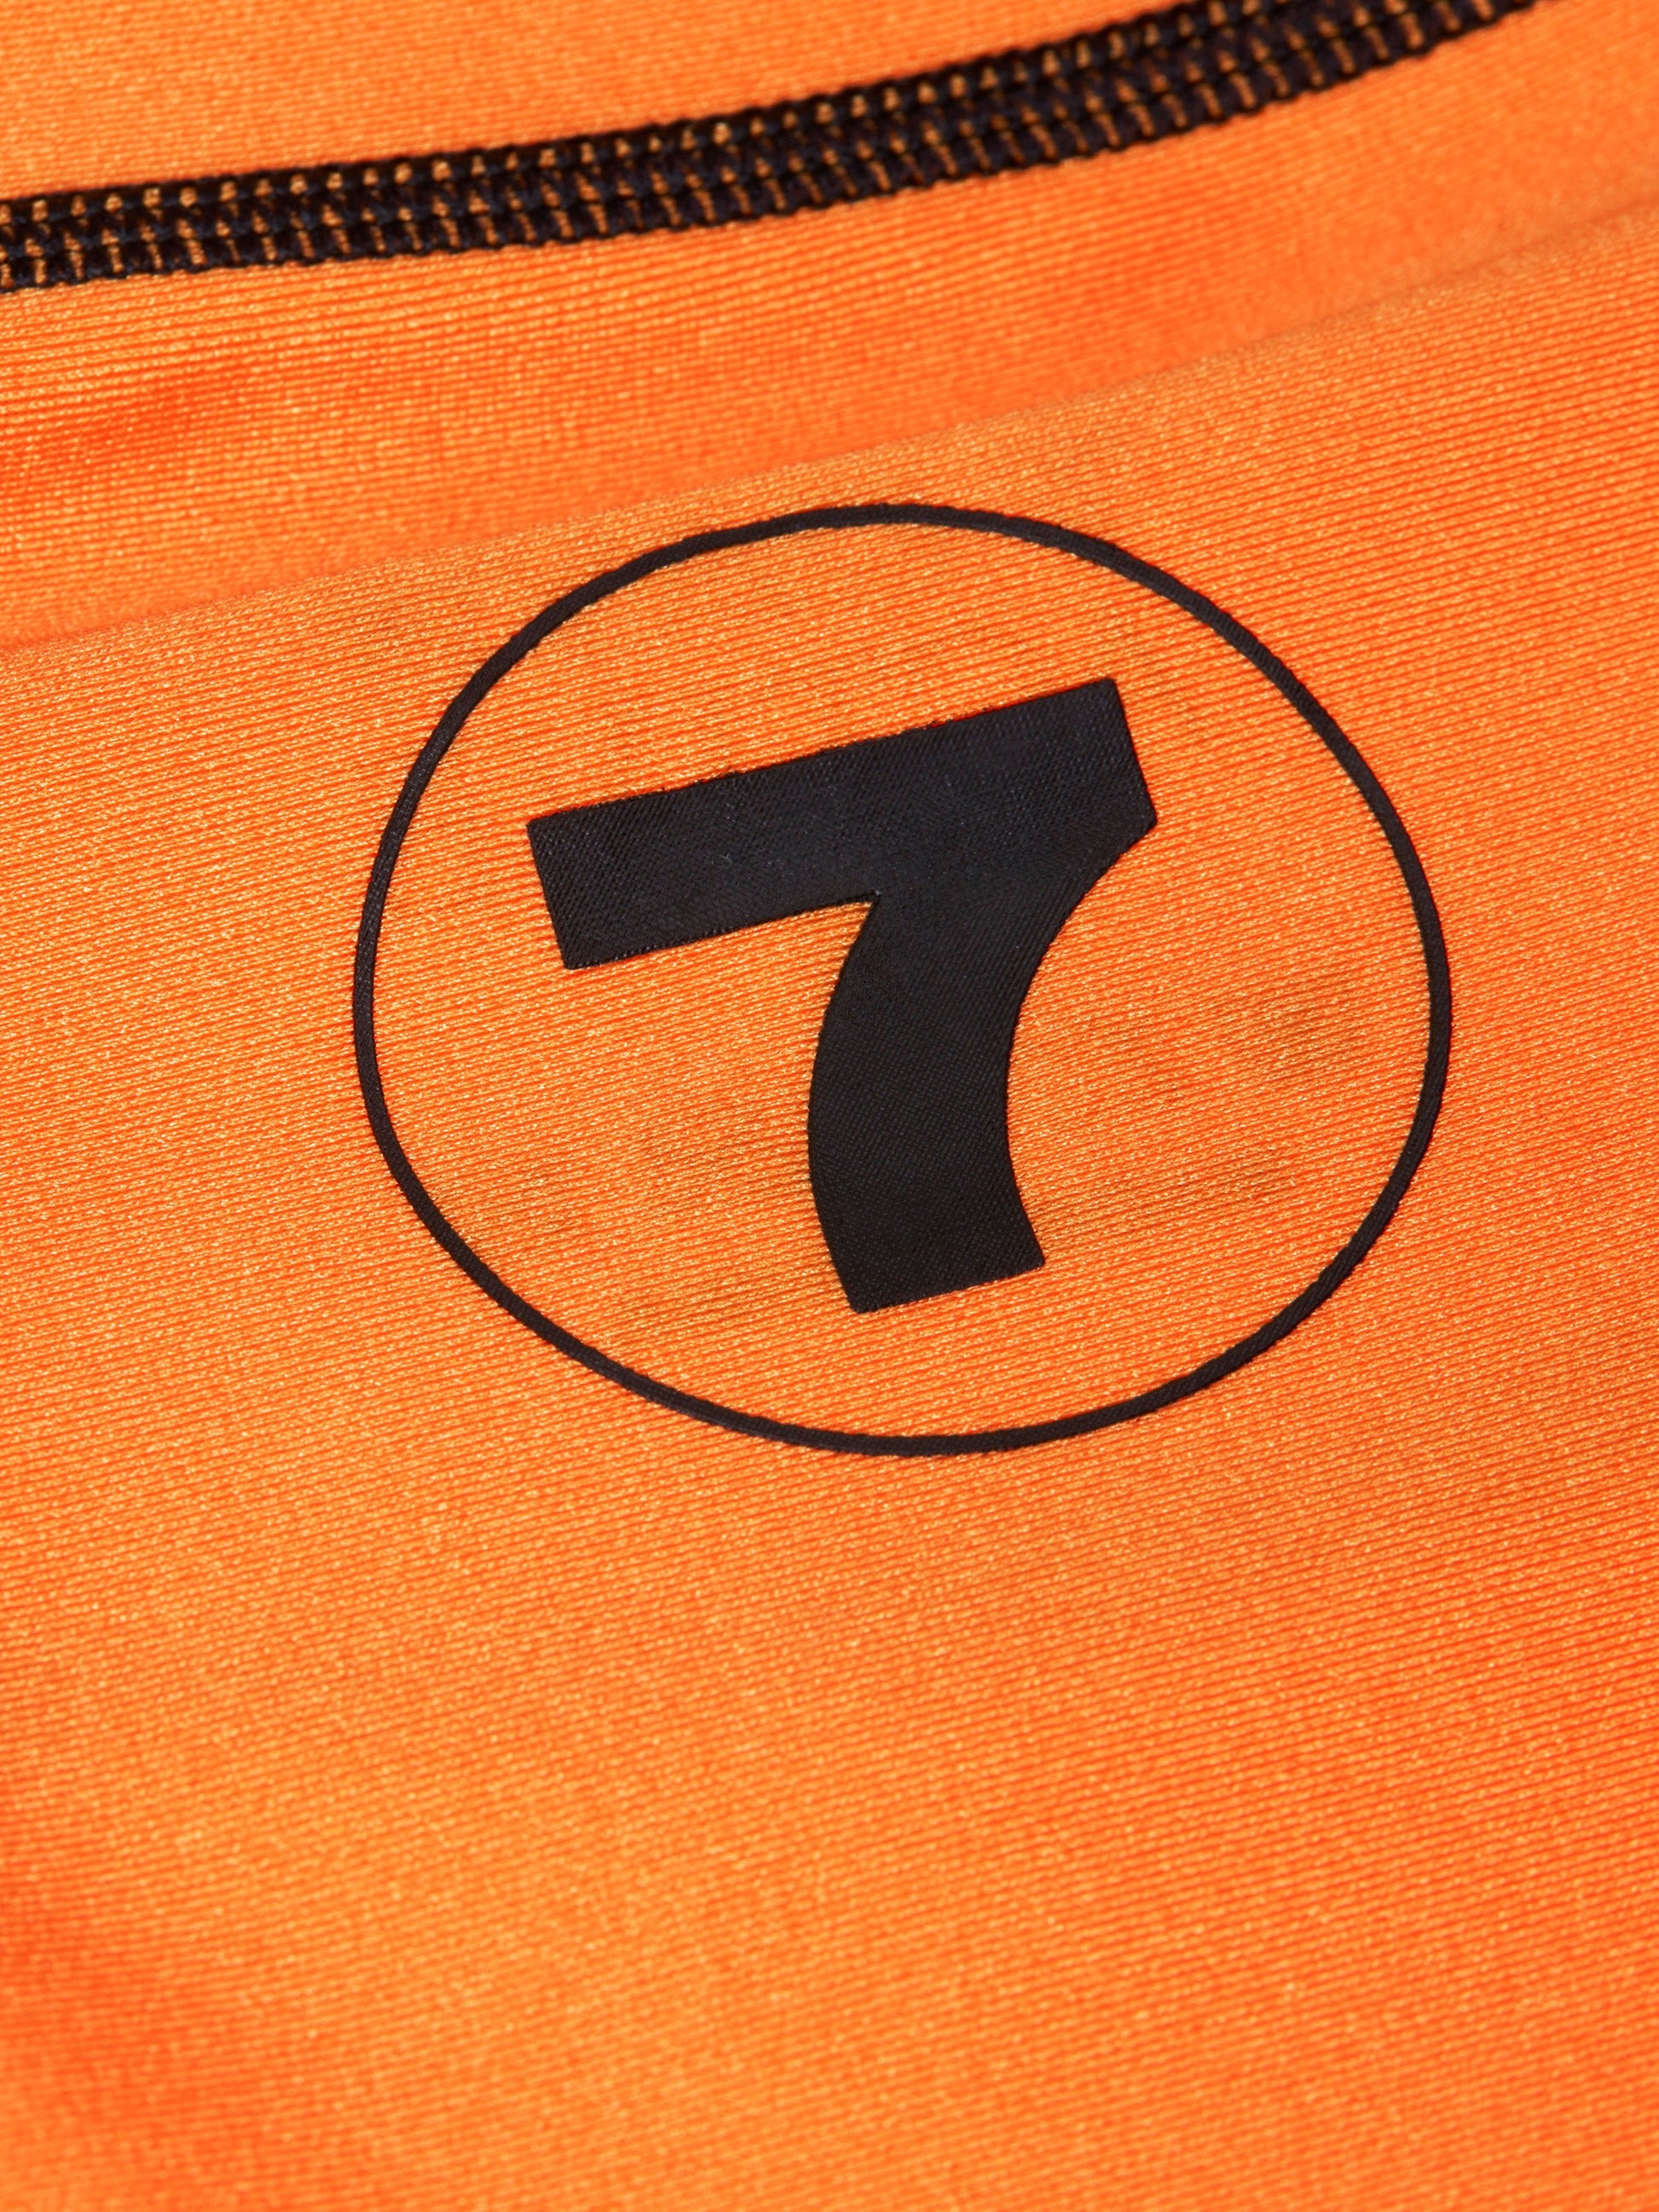 7 DAYS Tech Long Sleeve Top L/S T-shirt 617 Vibrant Orange